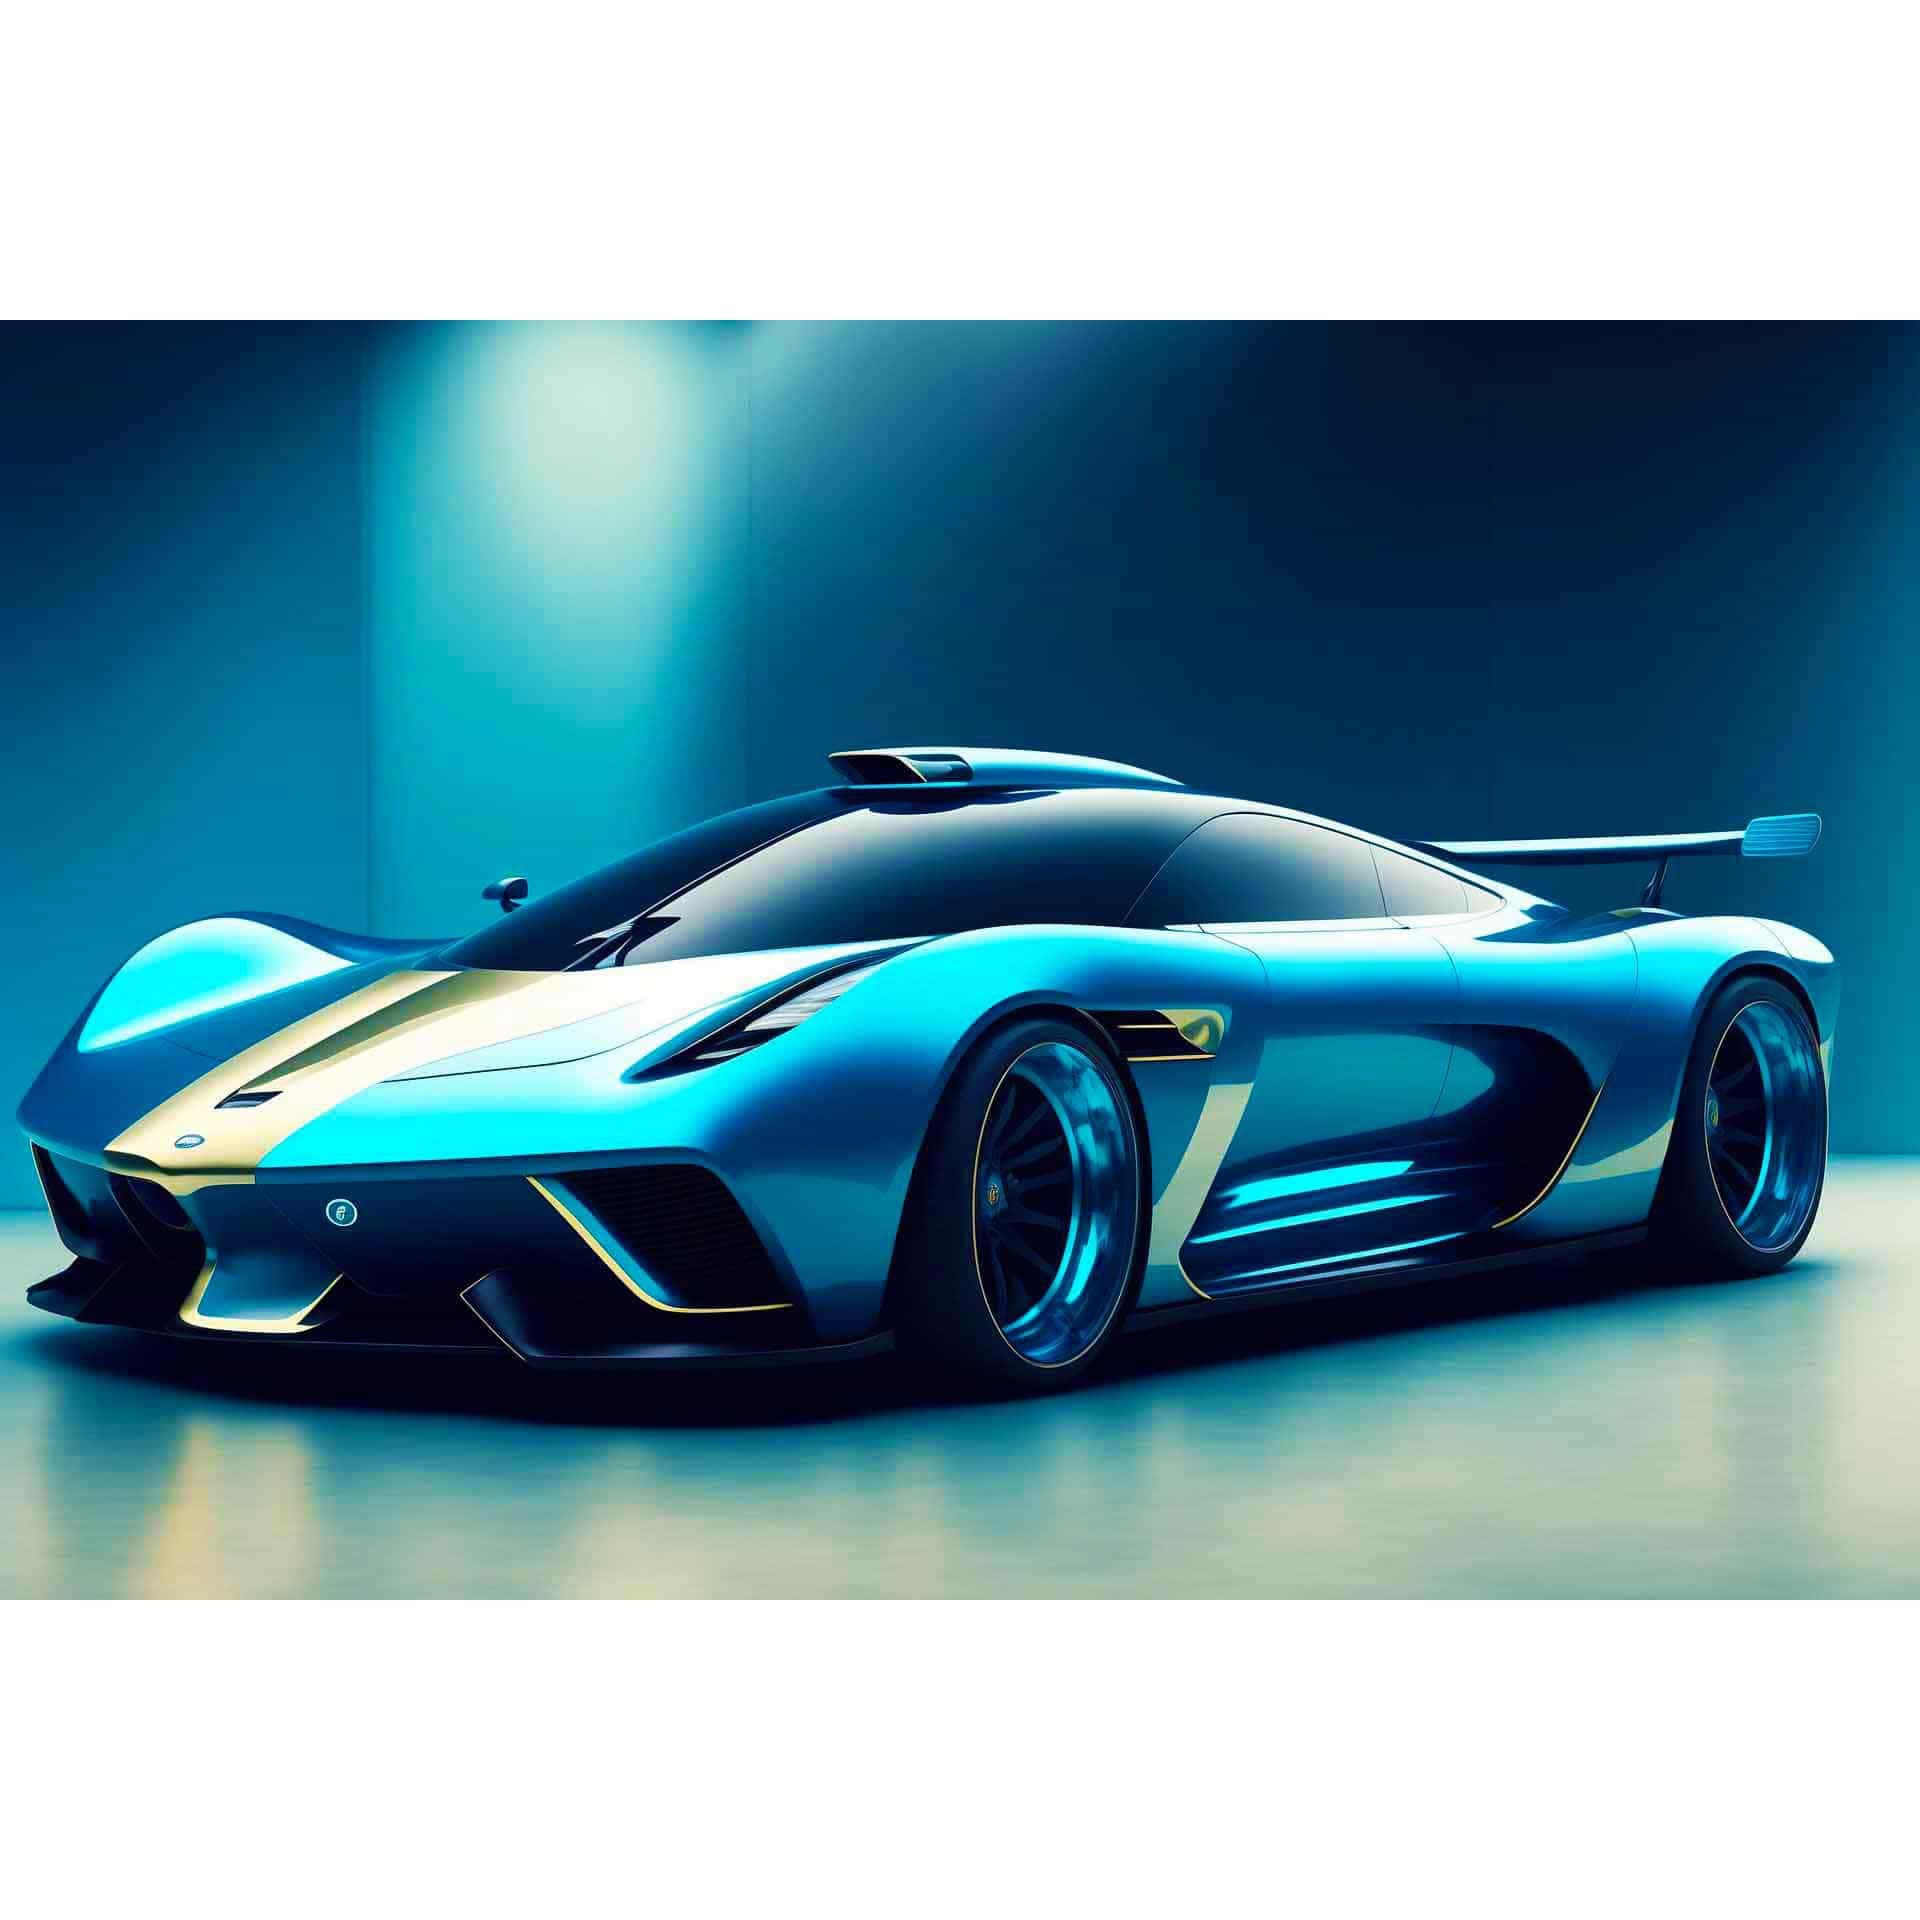 Diamond Painting - Blauer Sportwagen - gedruckt in Ultra-HD - Auto, Horizontal